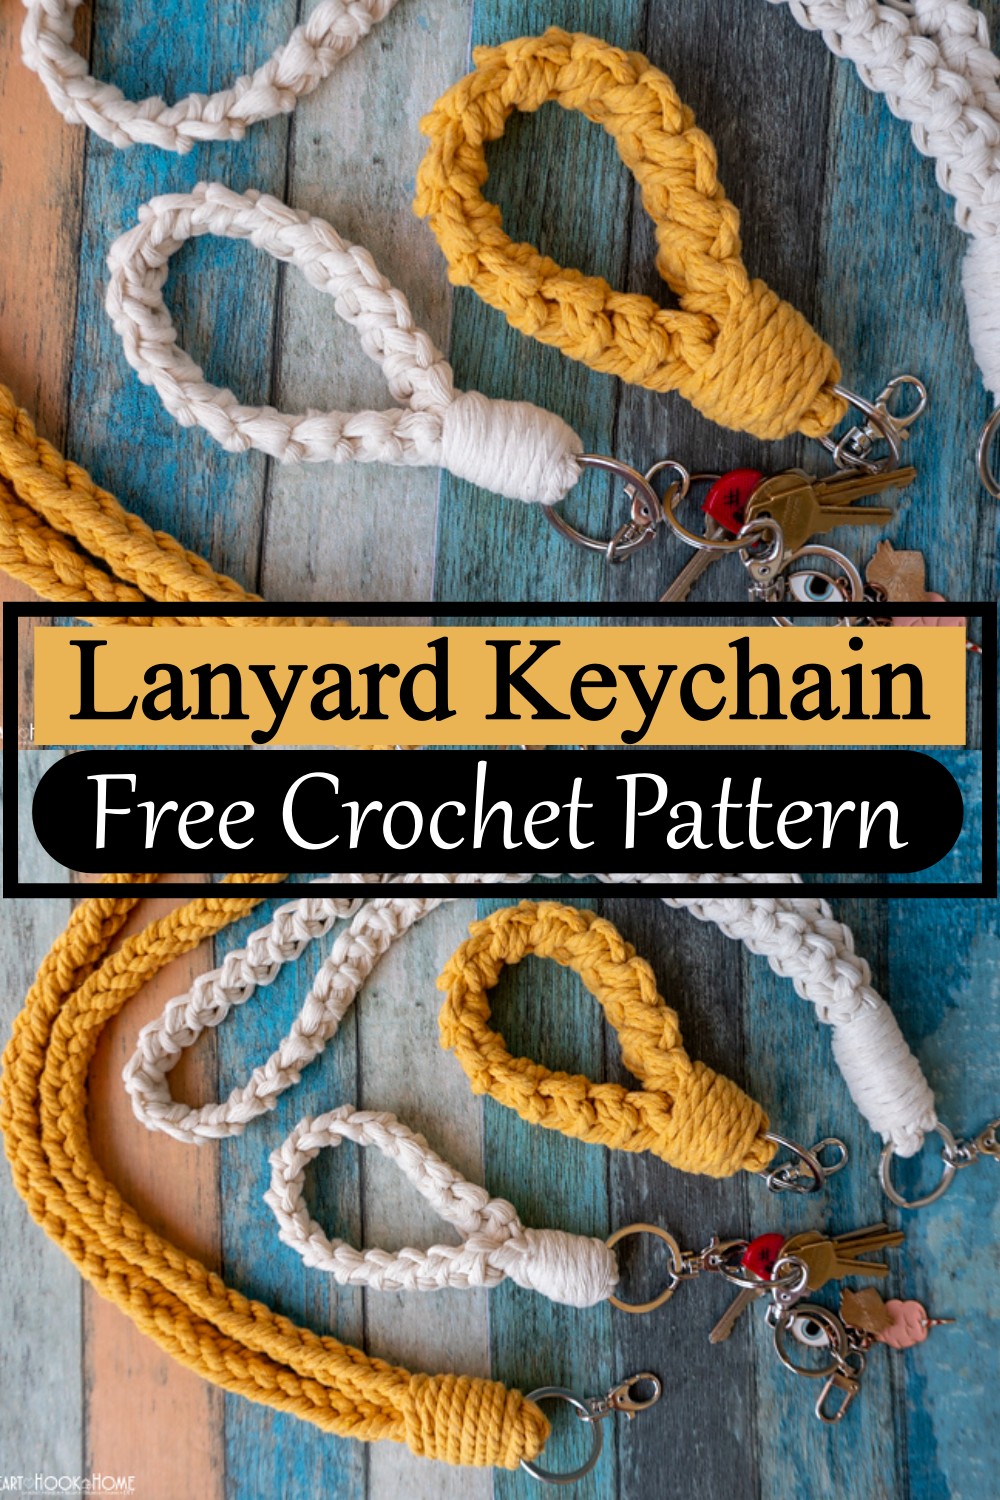 Lanyard Keychain